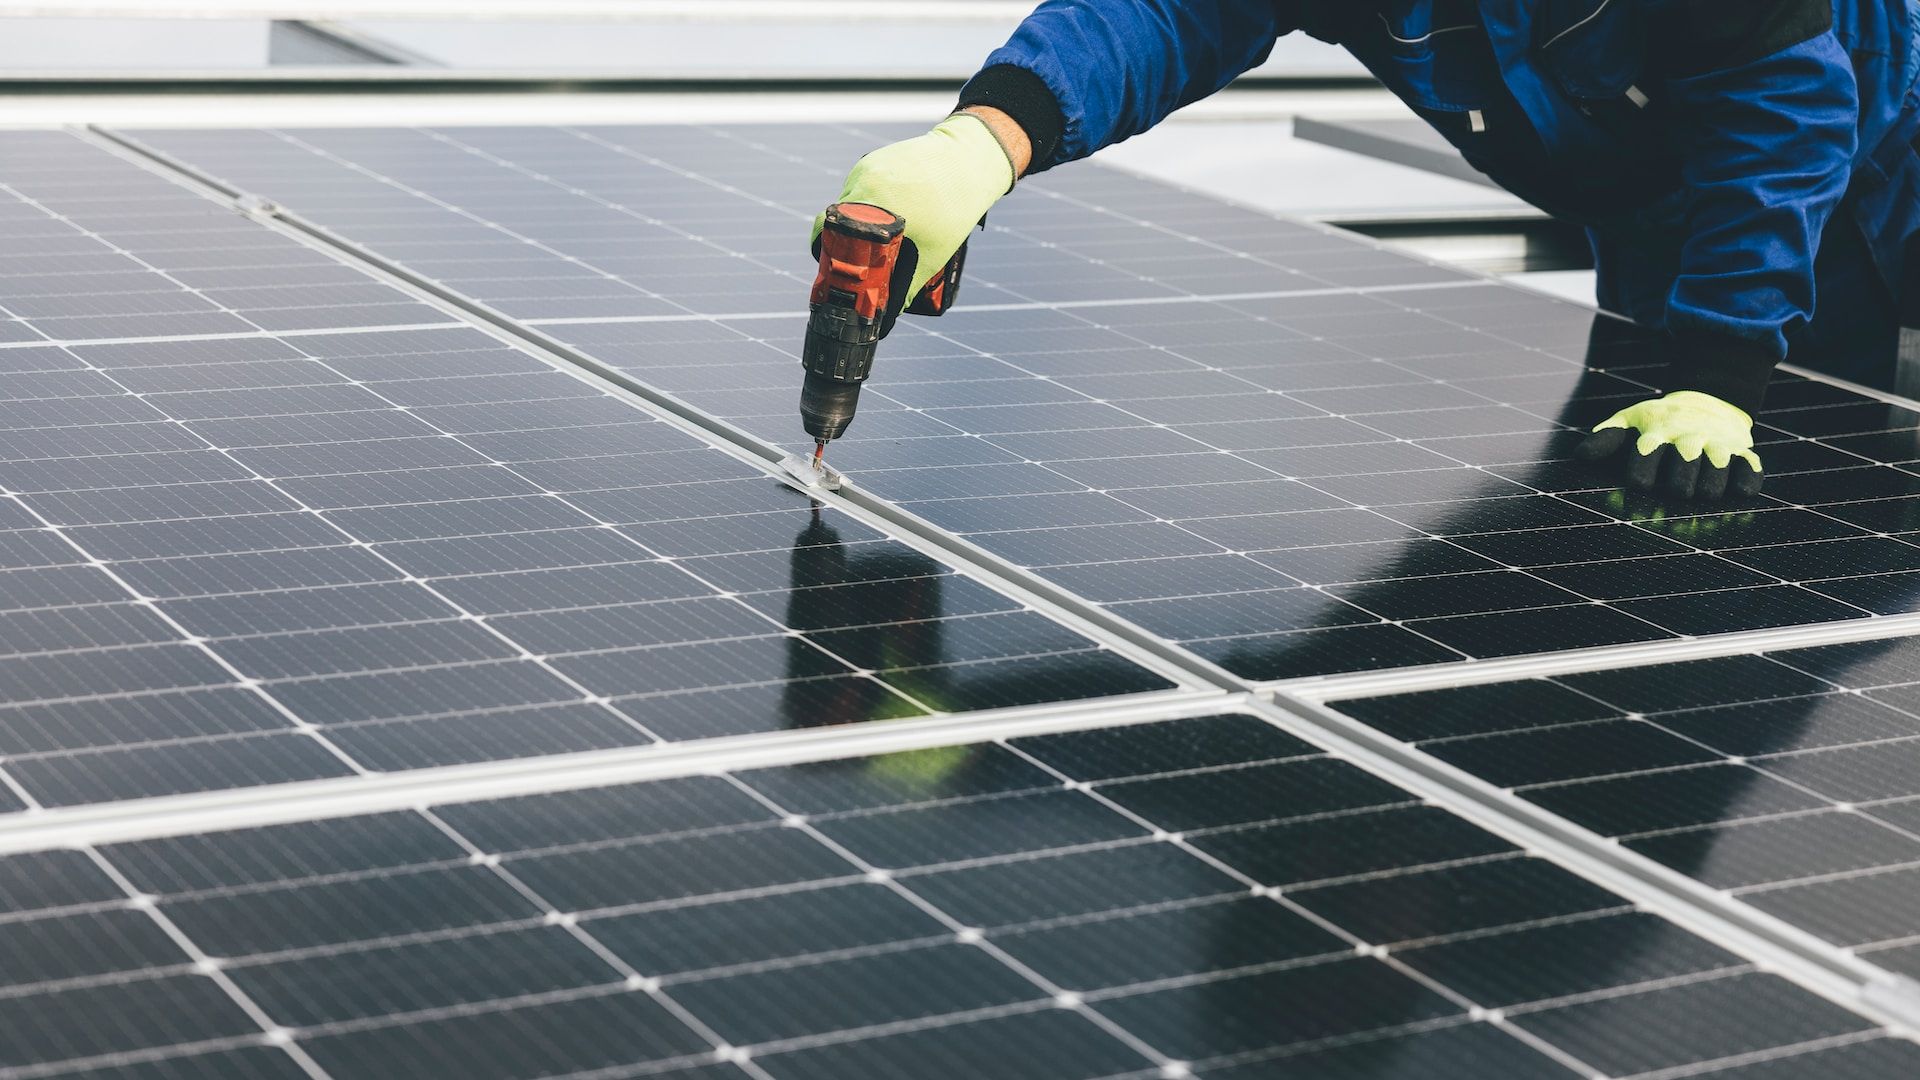 Solar Panel - Sustainable Energy Source